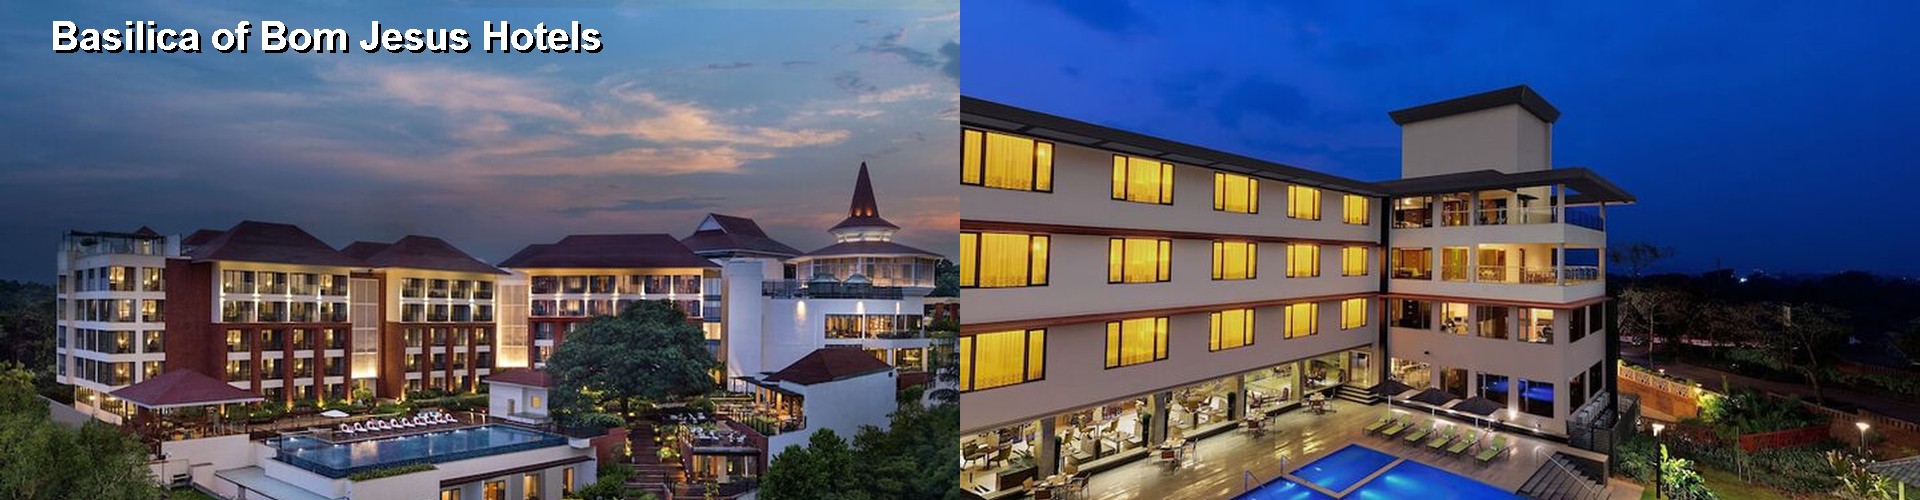 4 Best Hotels near Basilica of Bom Jesus